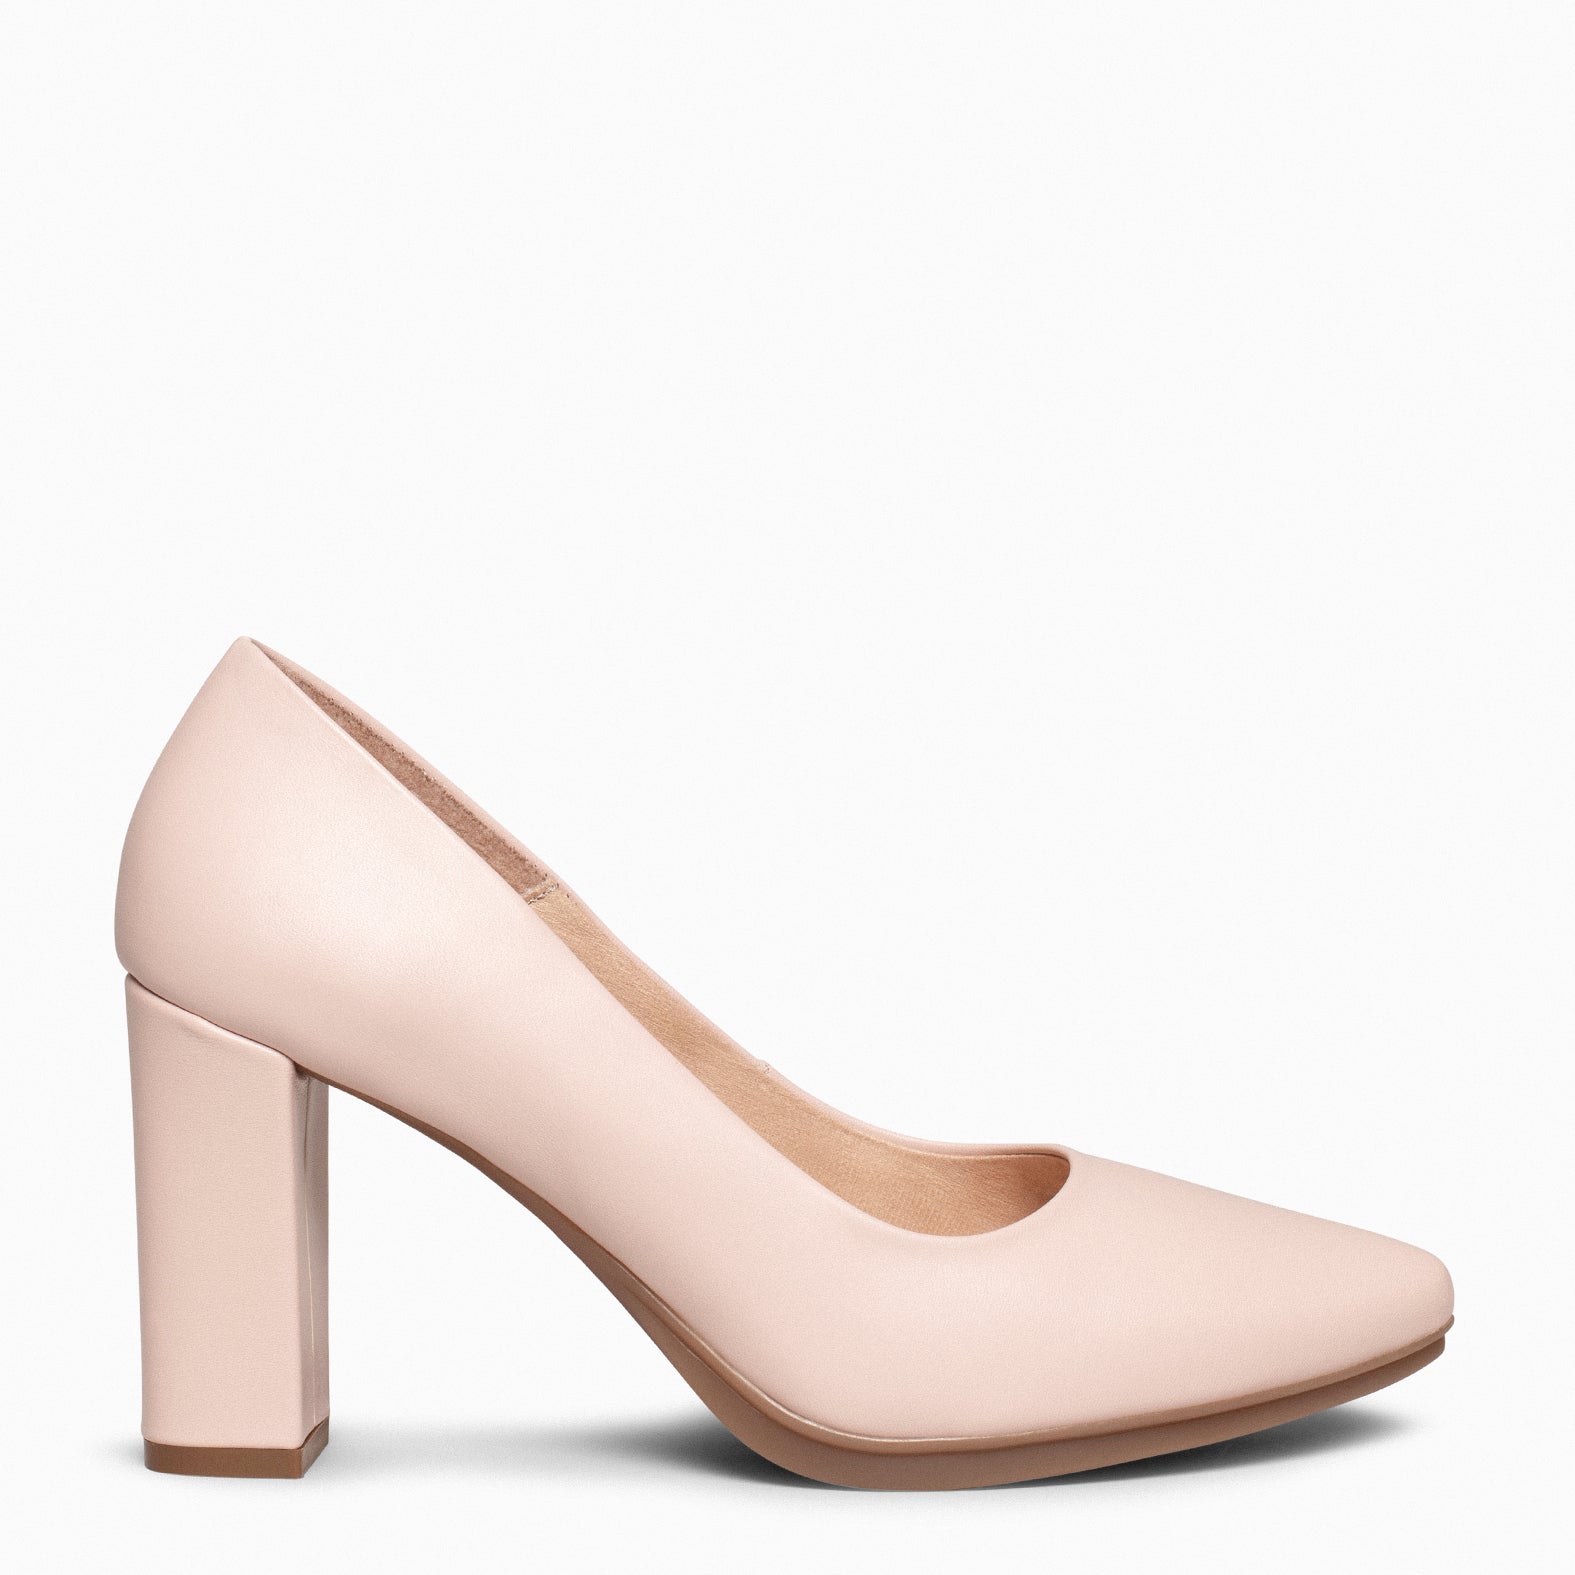 URBAN SALON –  NUDE nappa leather high heel